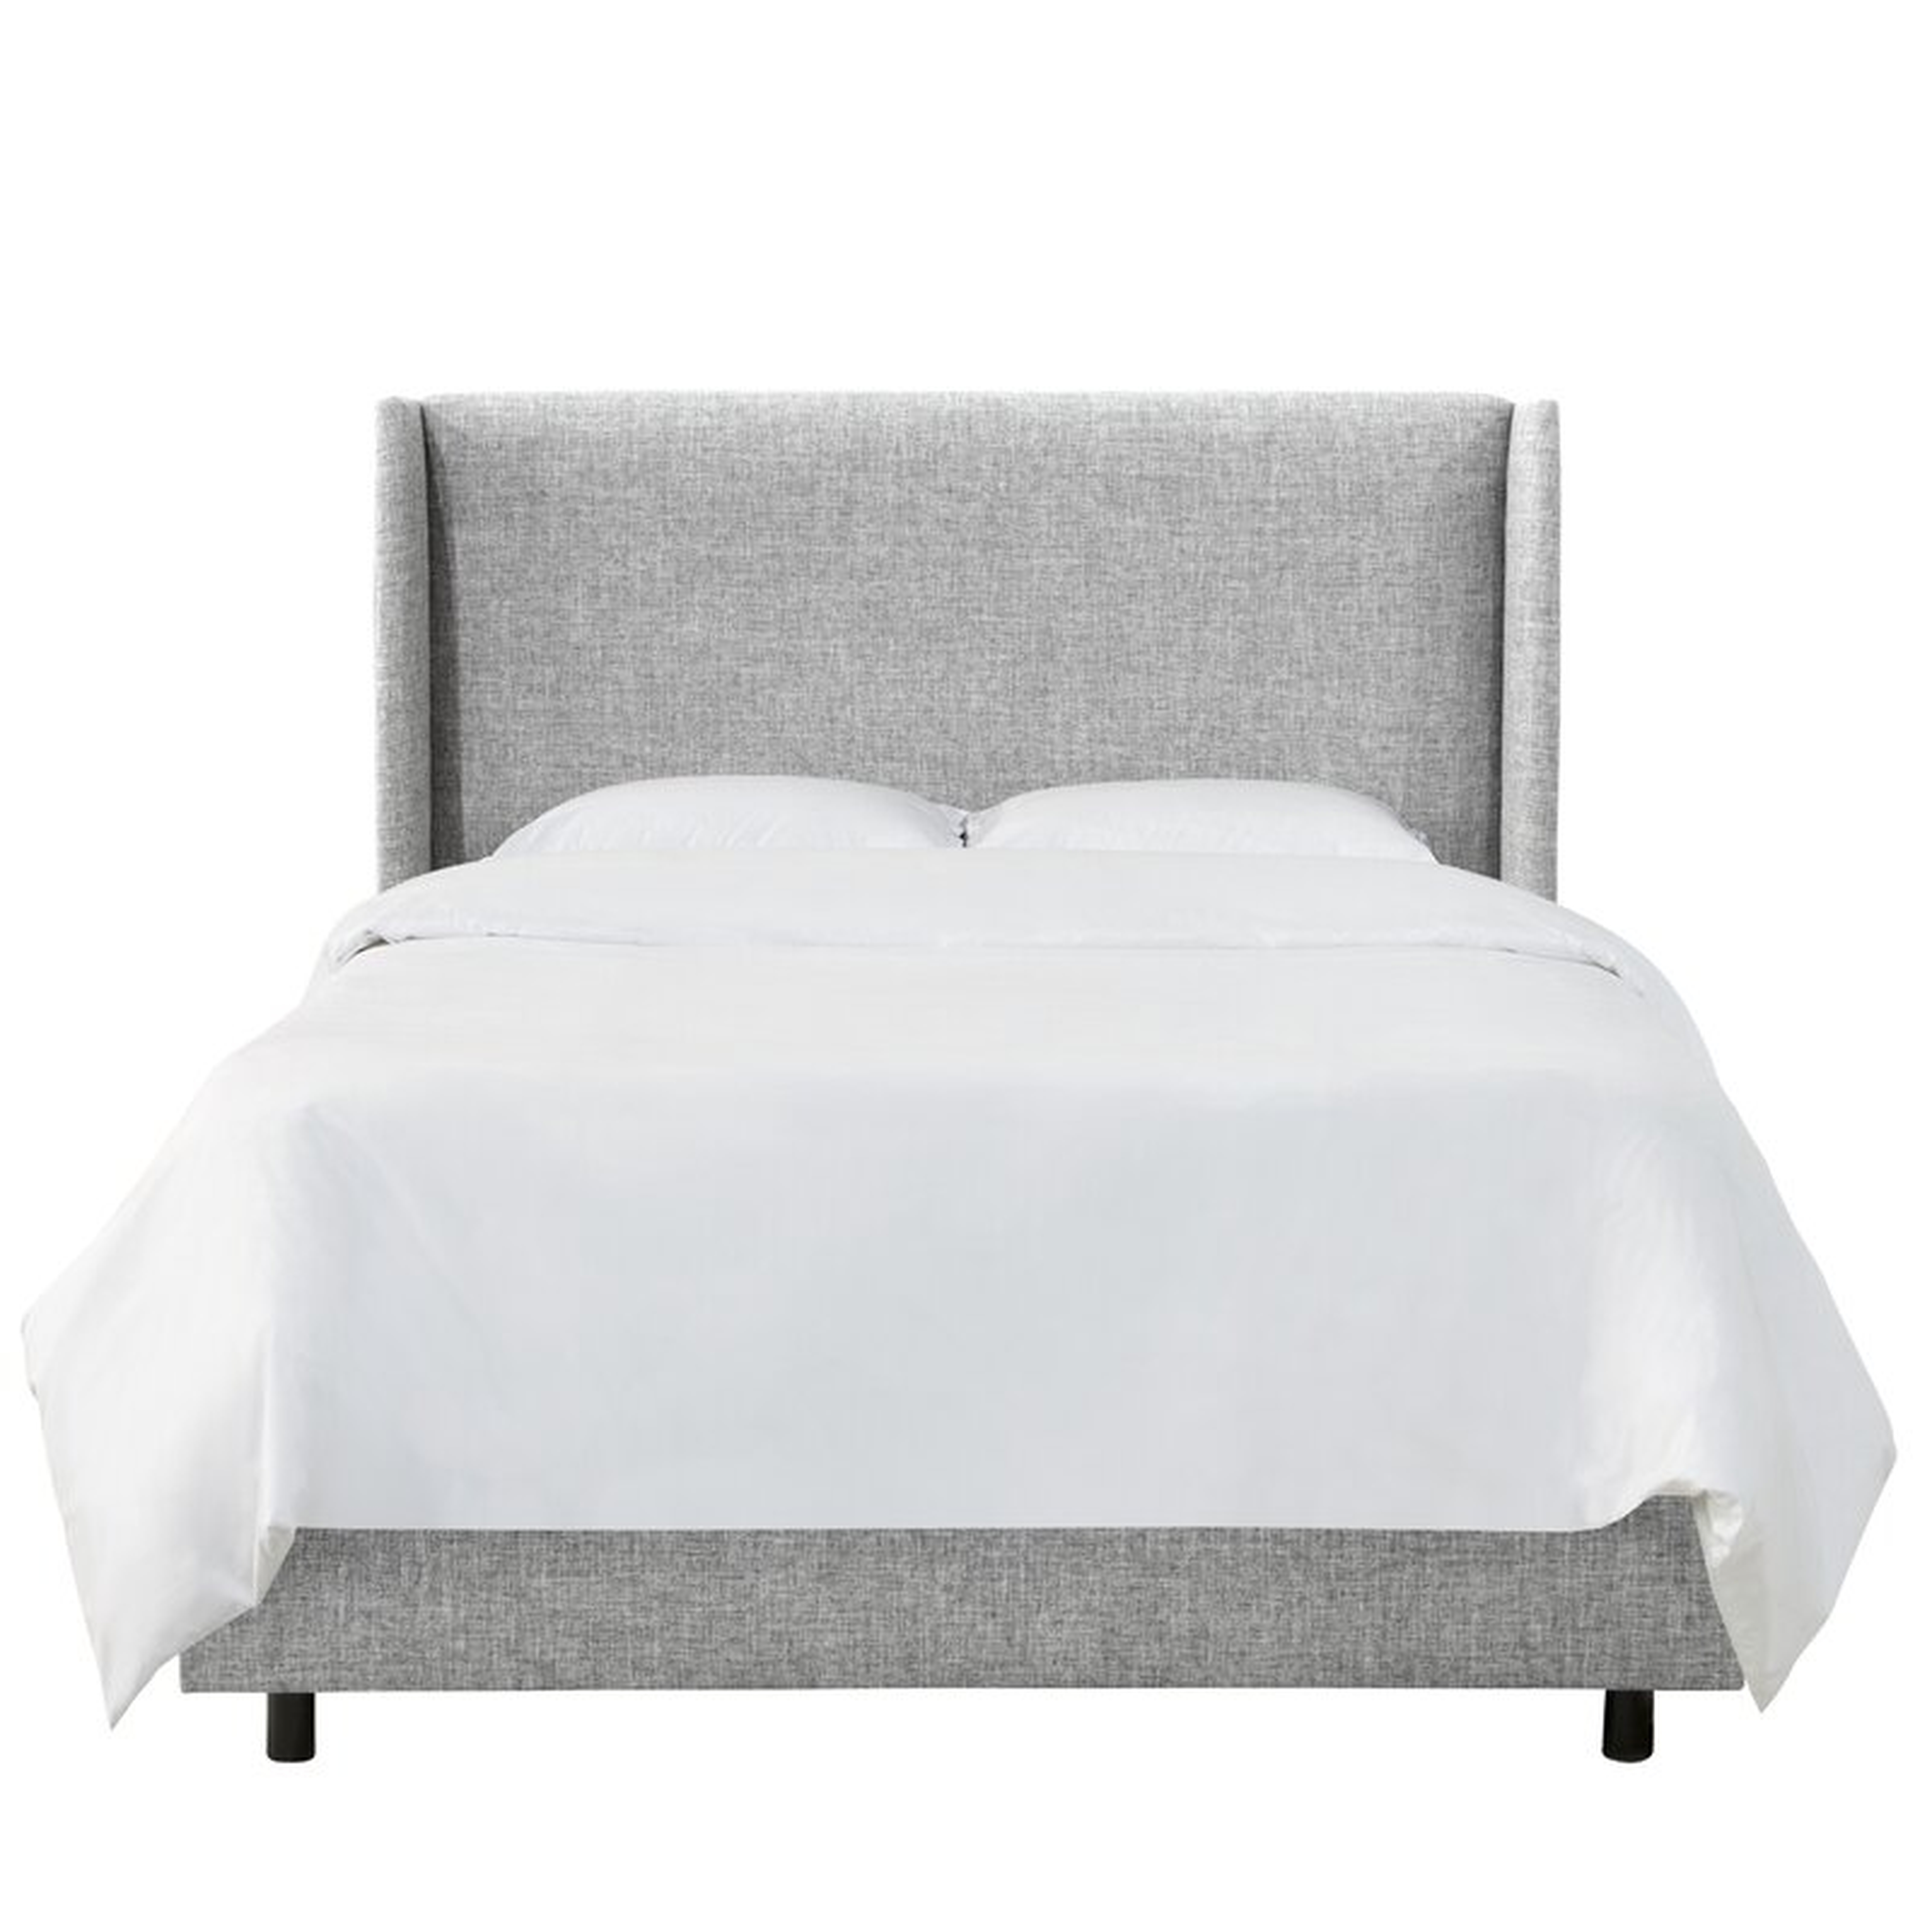 Holst Upholstered Low Profile Standard Bed - Wayfair